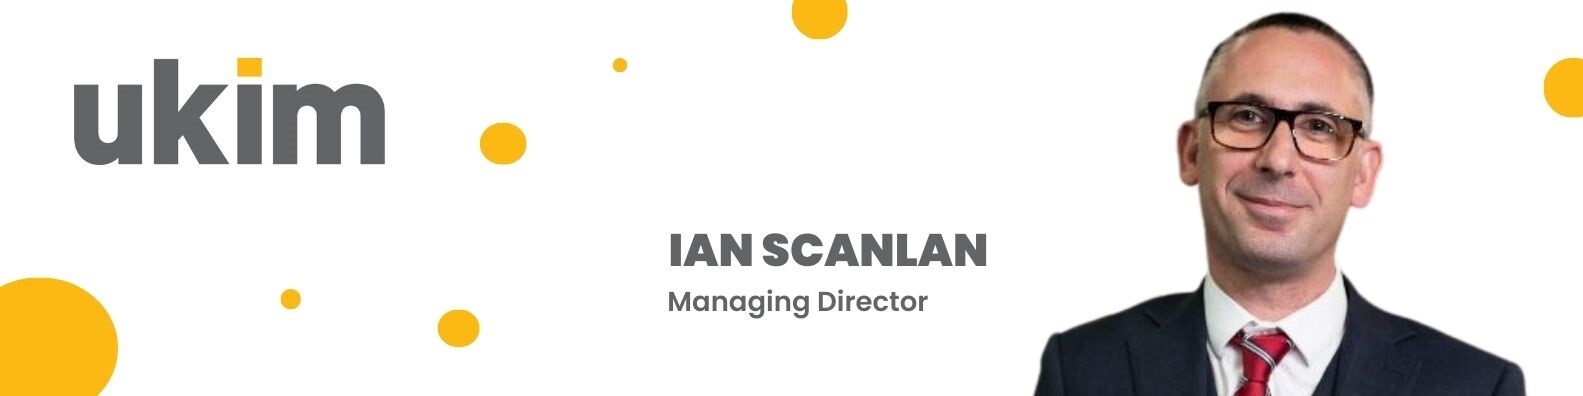 ian-scanlan-intro-banner (1)